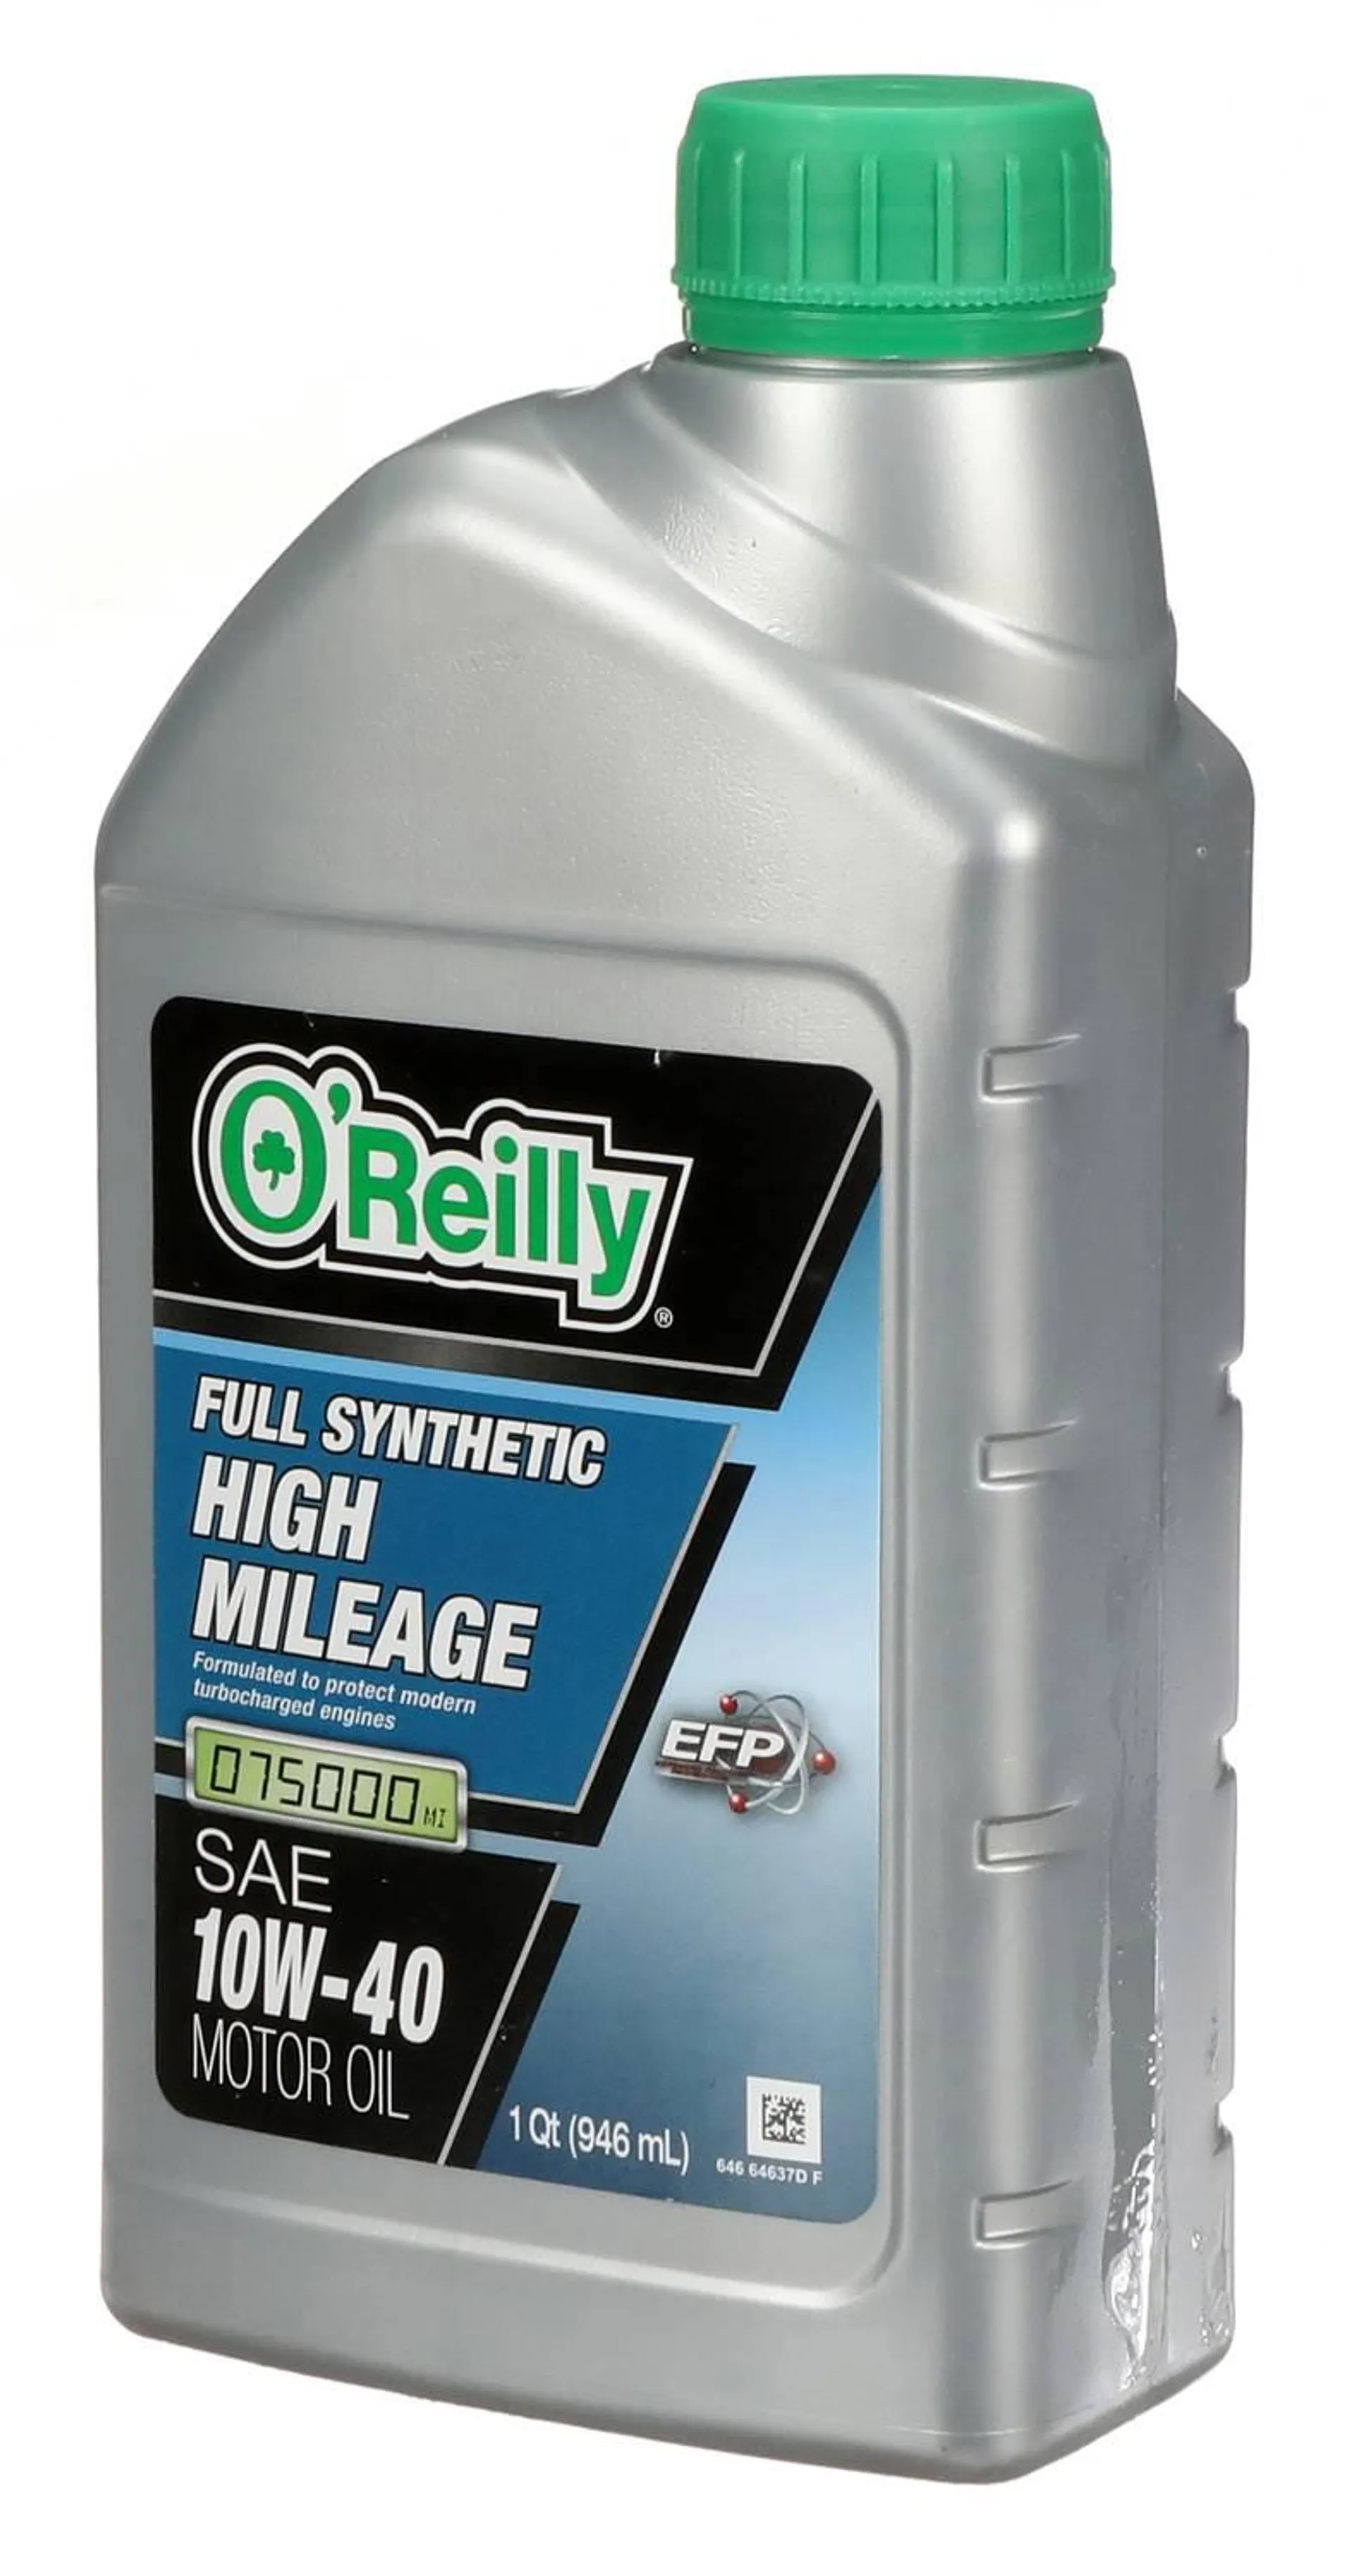 O'Reilly Full Synthetic Motor Oil 10W-40 1 Quart - HI-SYN10-40